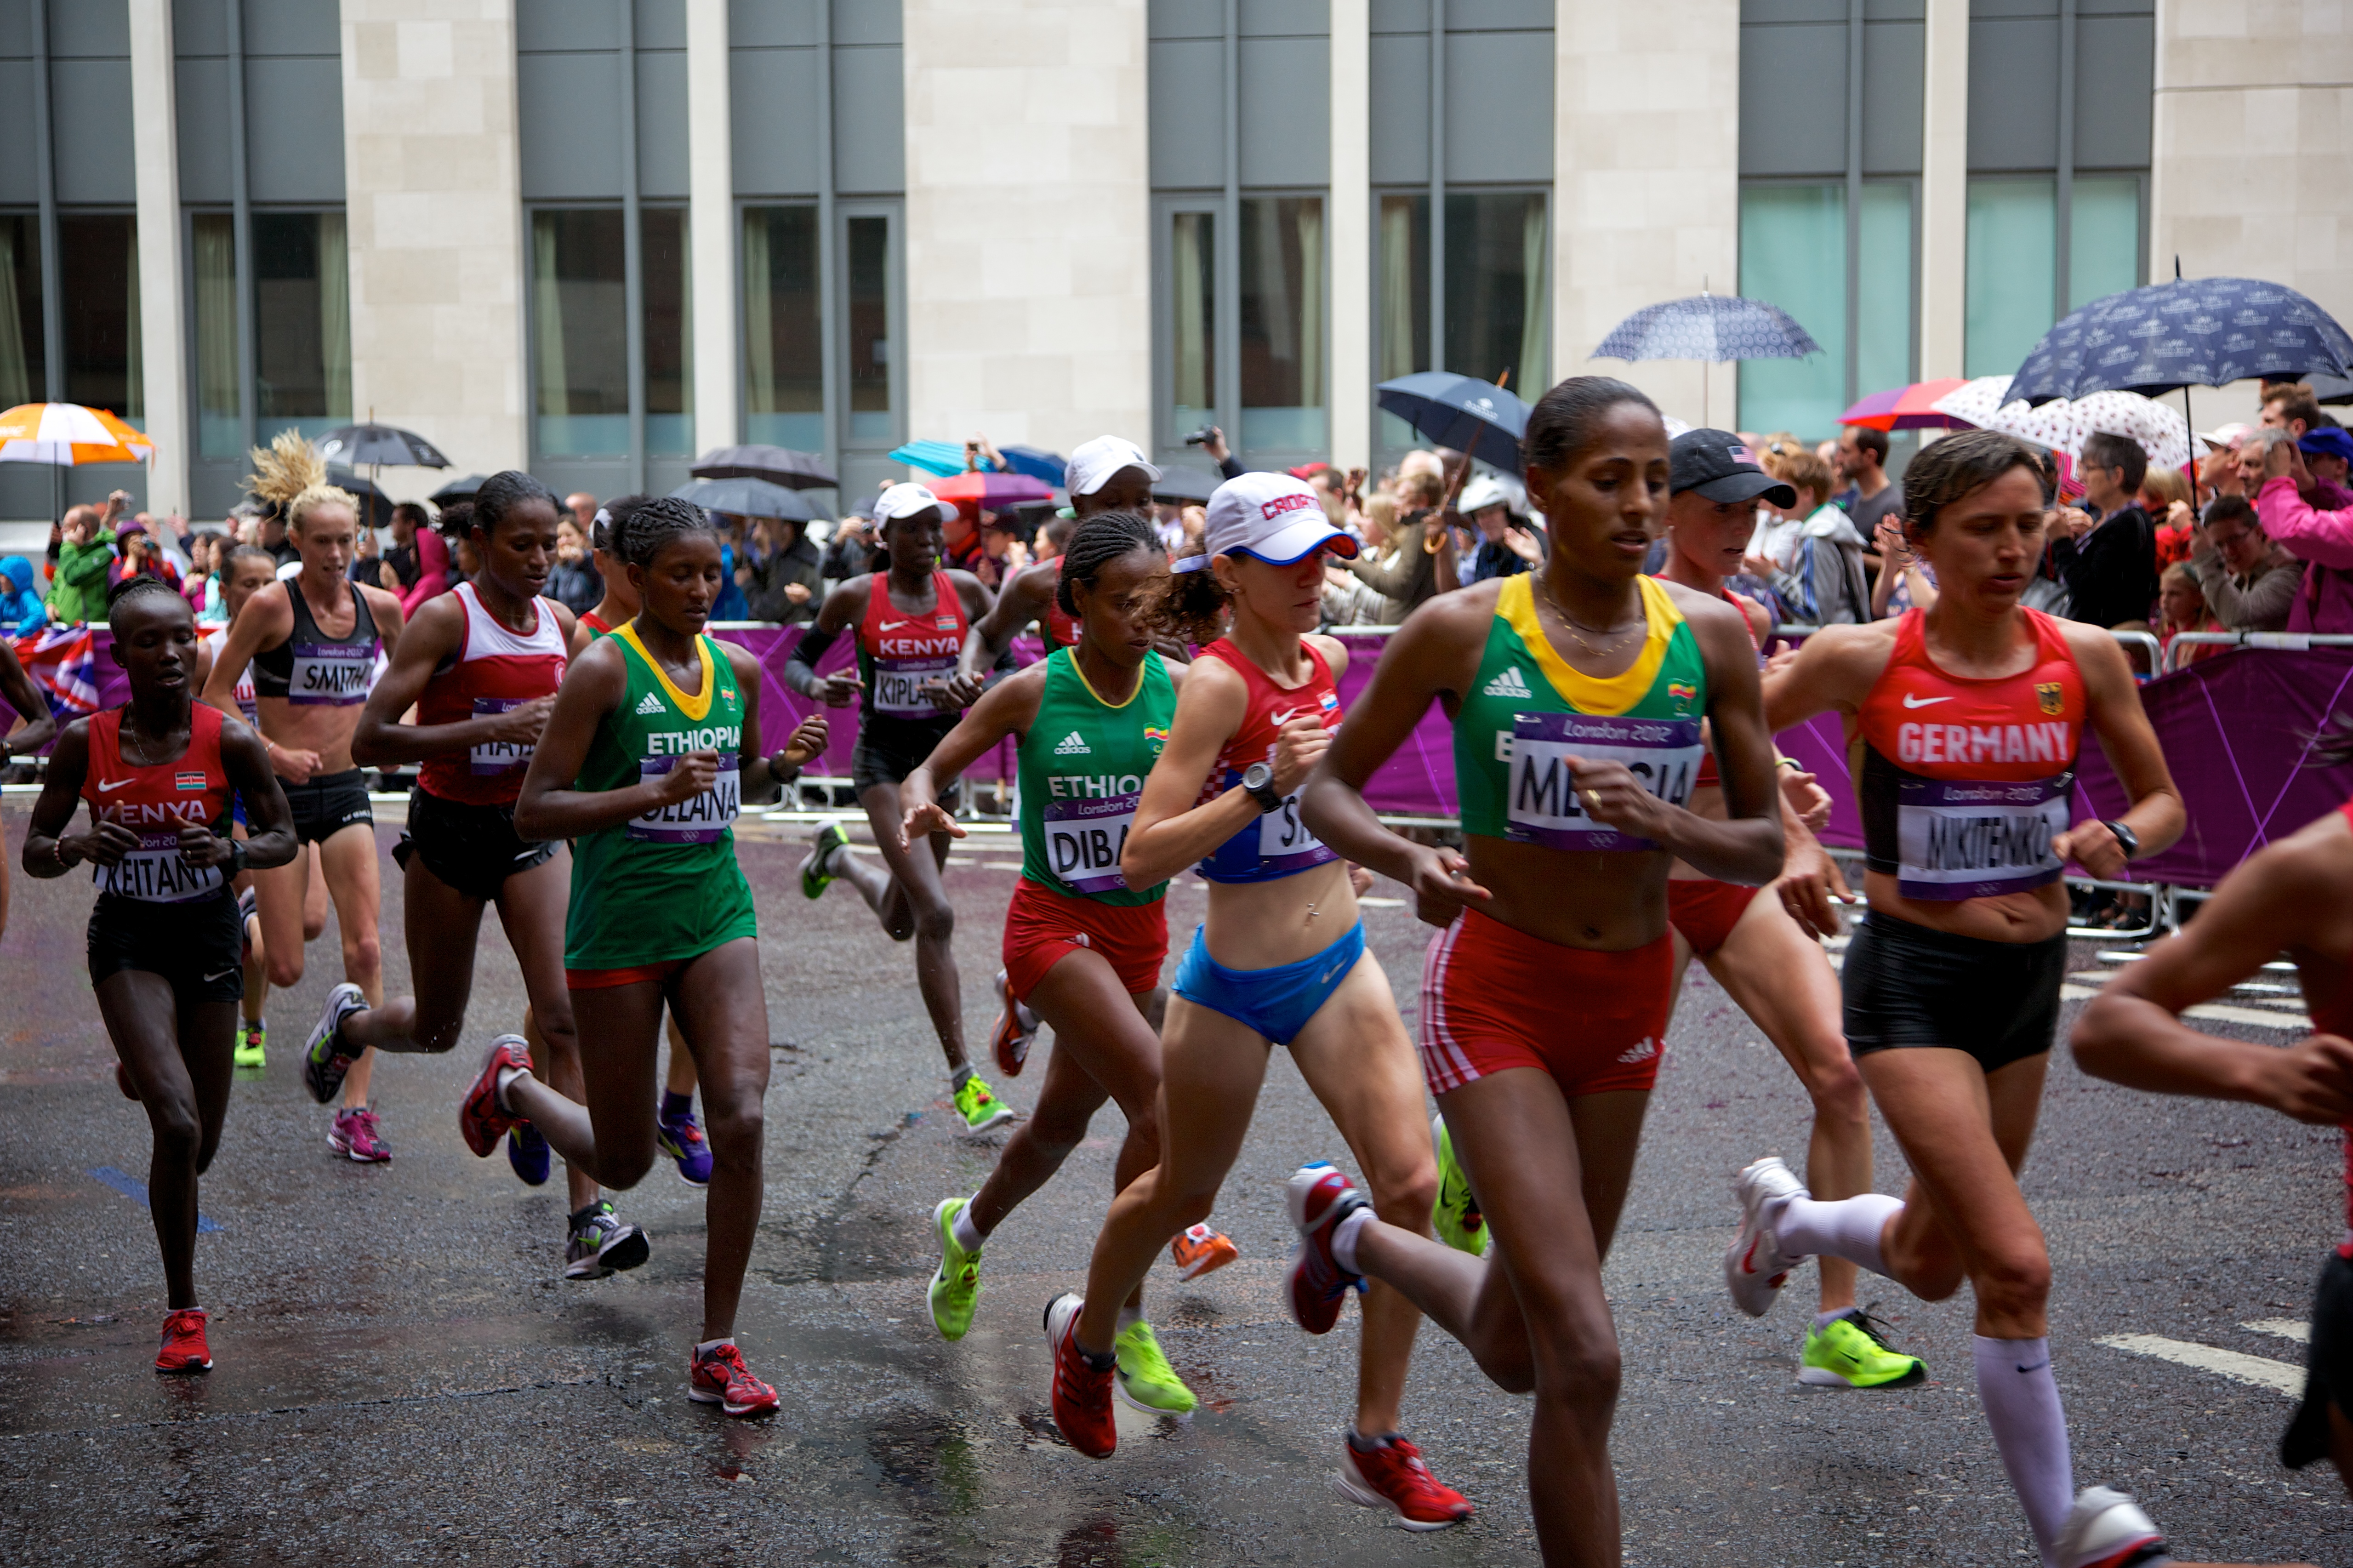 http://upload.wikimedia.org/wikipedia/commons/5/52/Women's_Marathon_London_2012_006.jpg